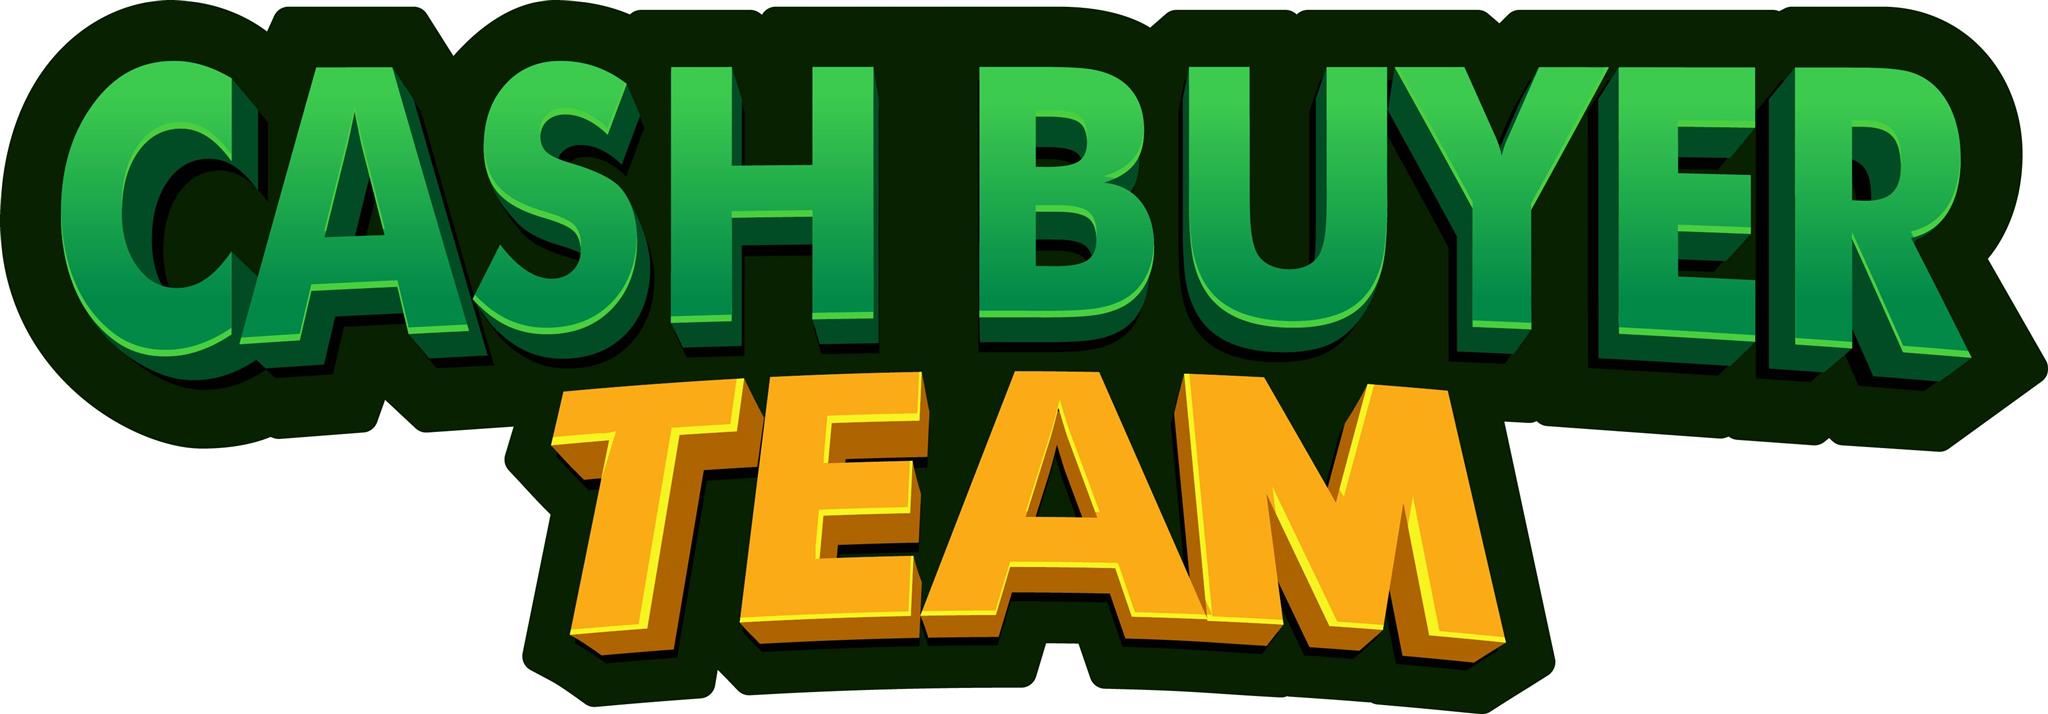 Cash Buyer Team's Logo